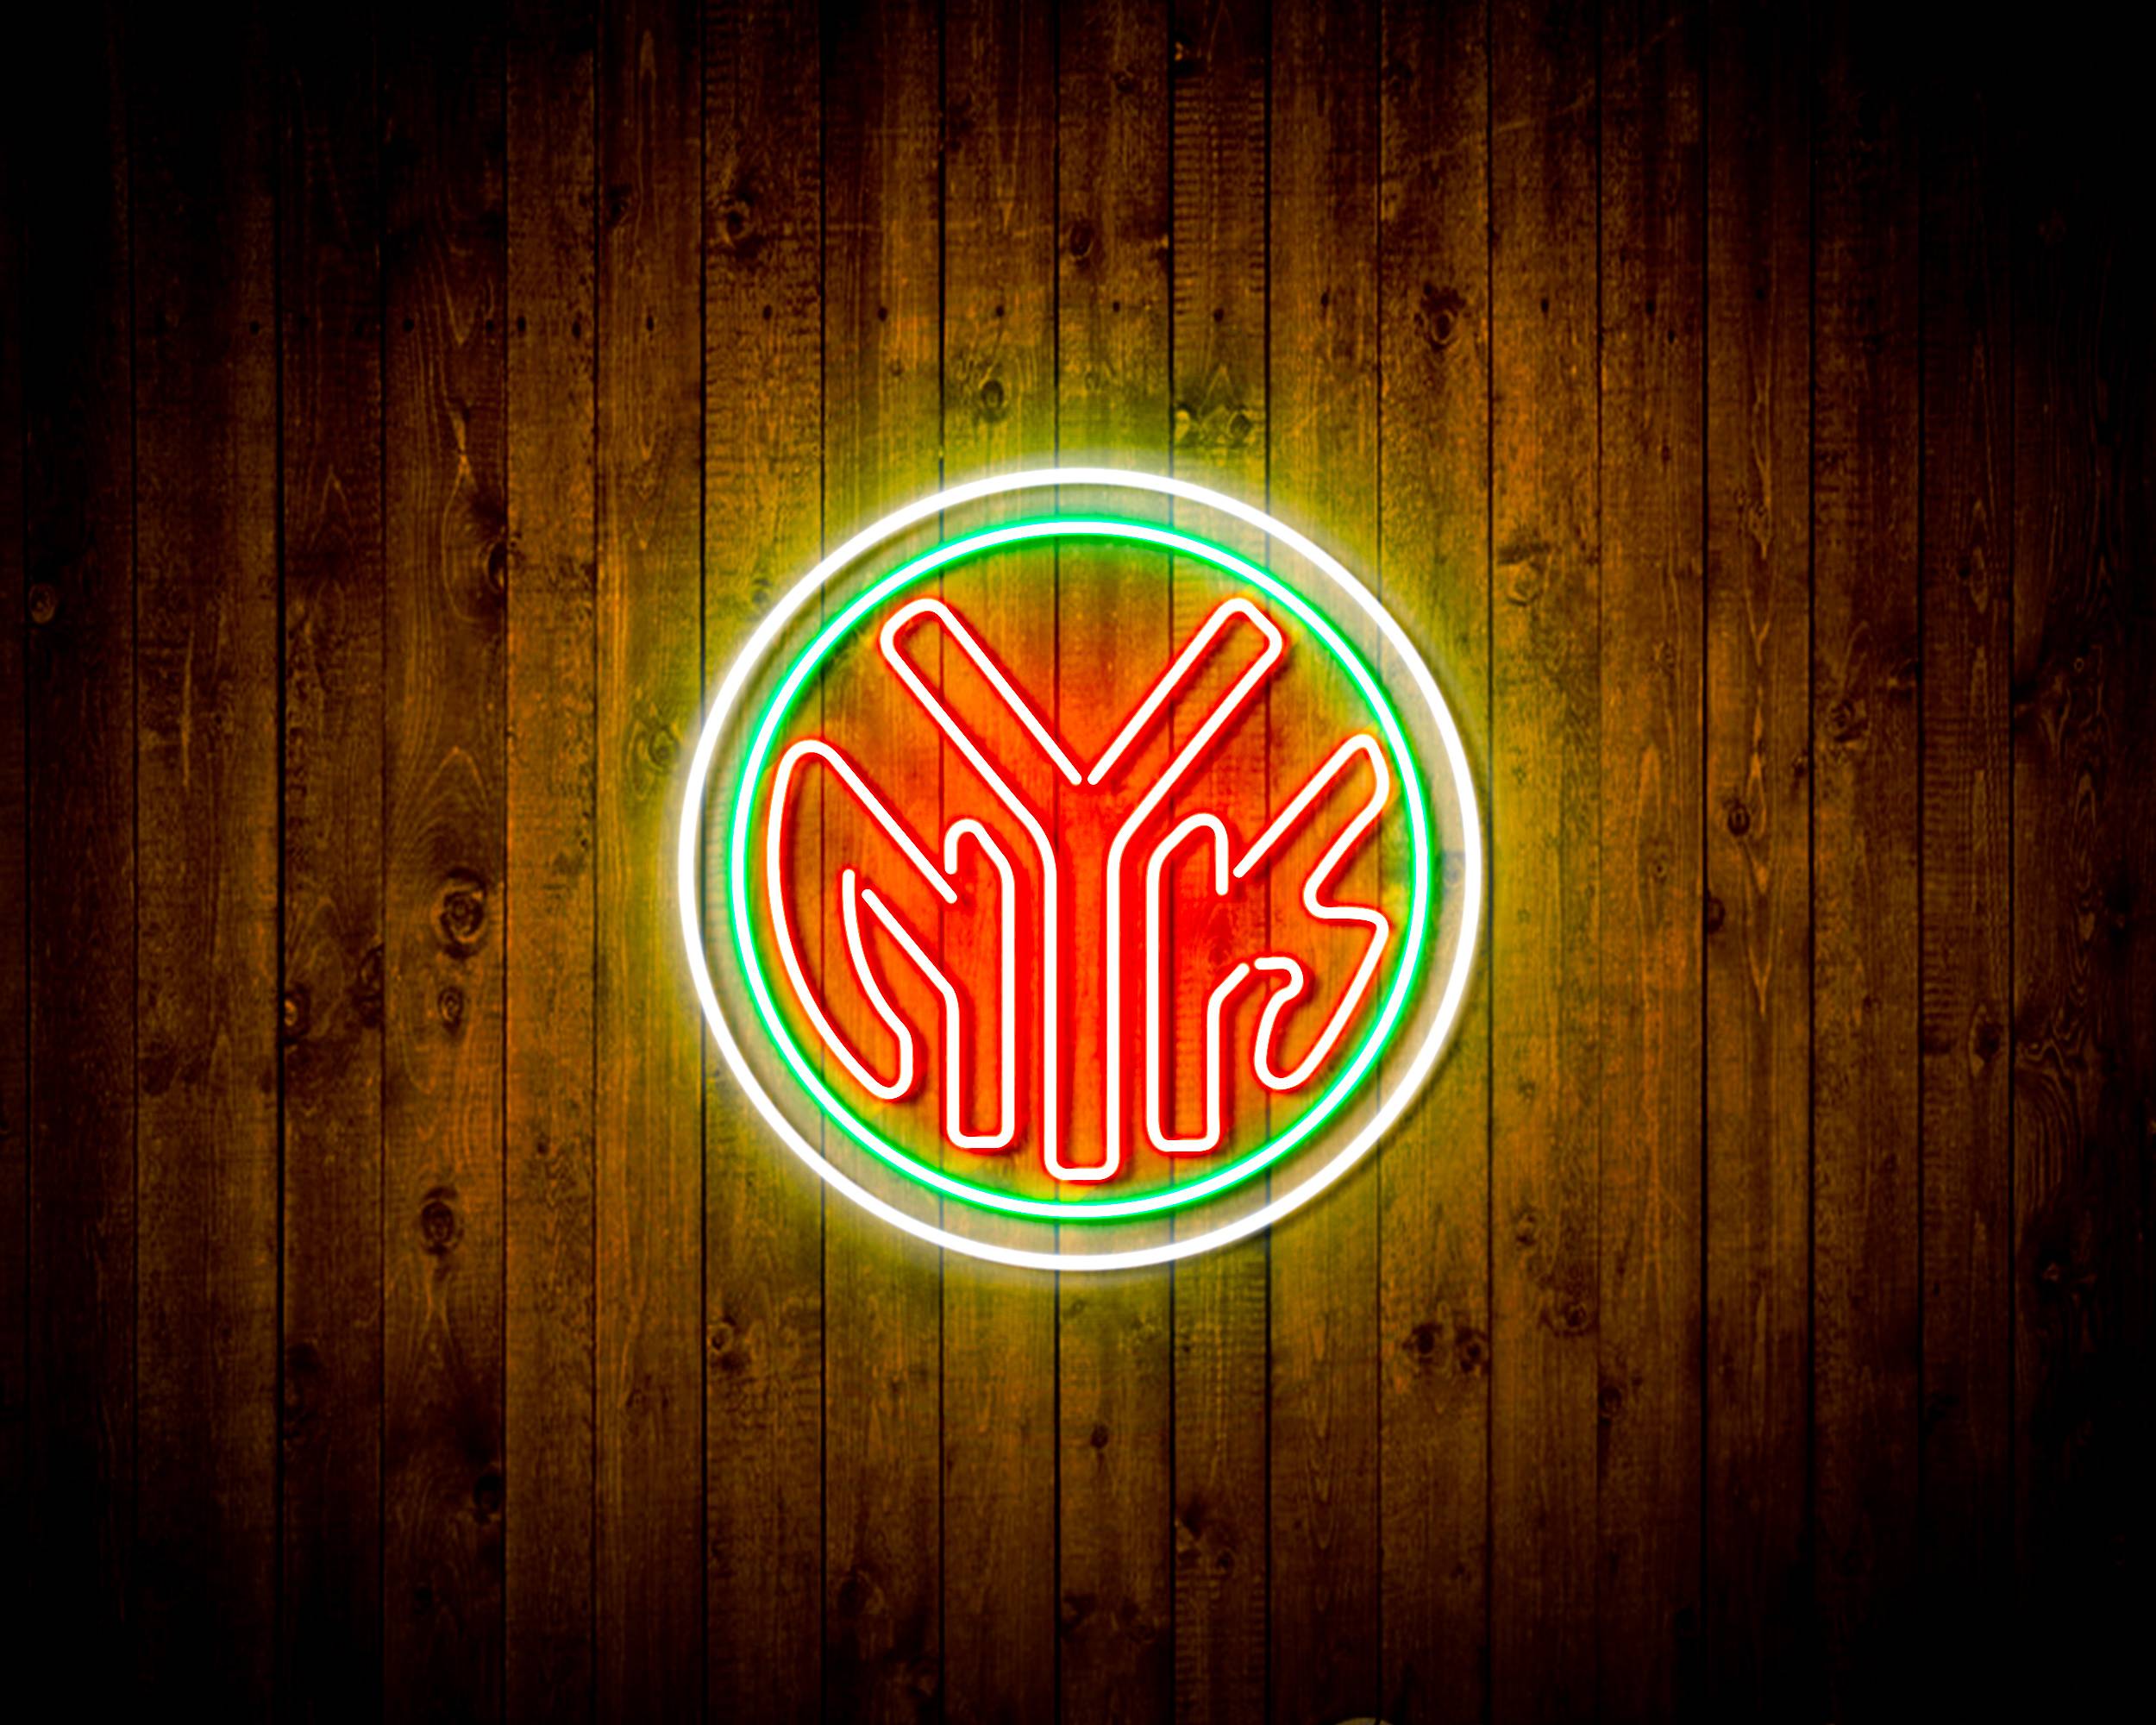 NBA New York Knicks Bar Neon Flex LED Sign